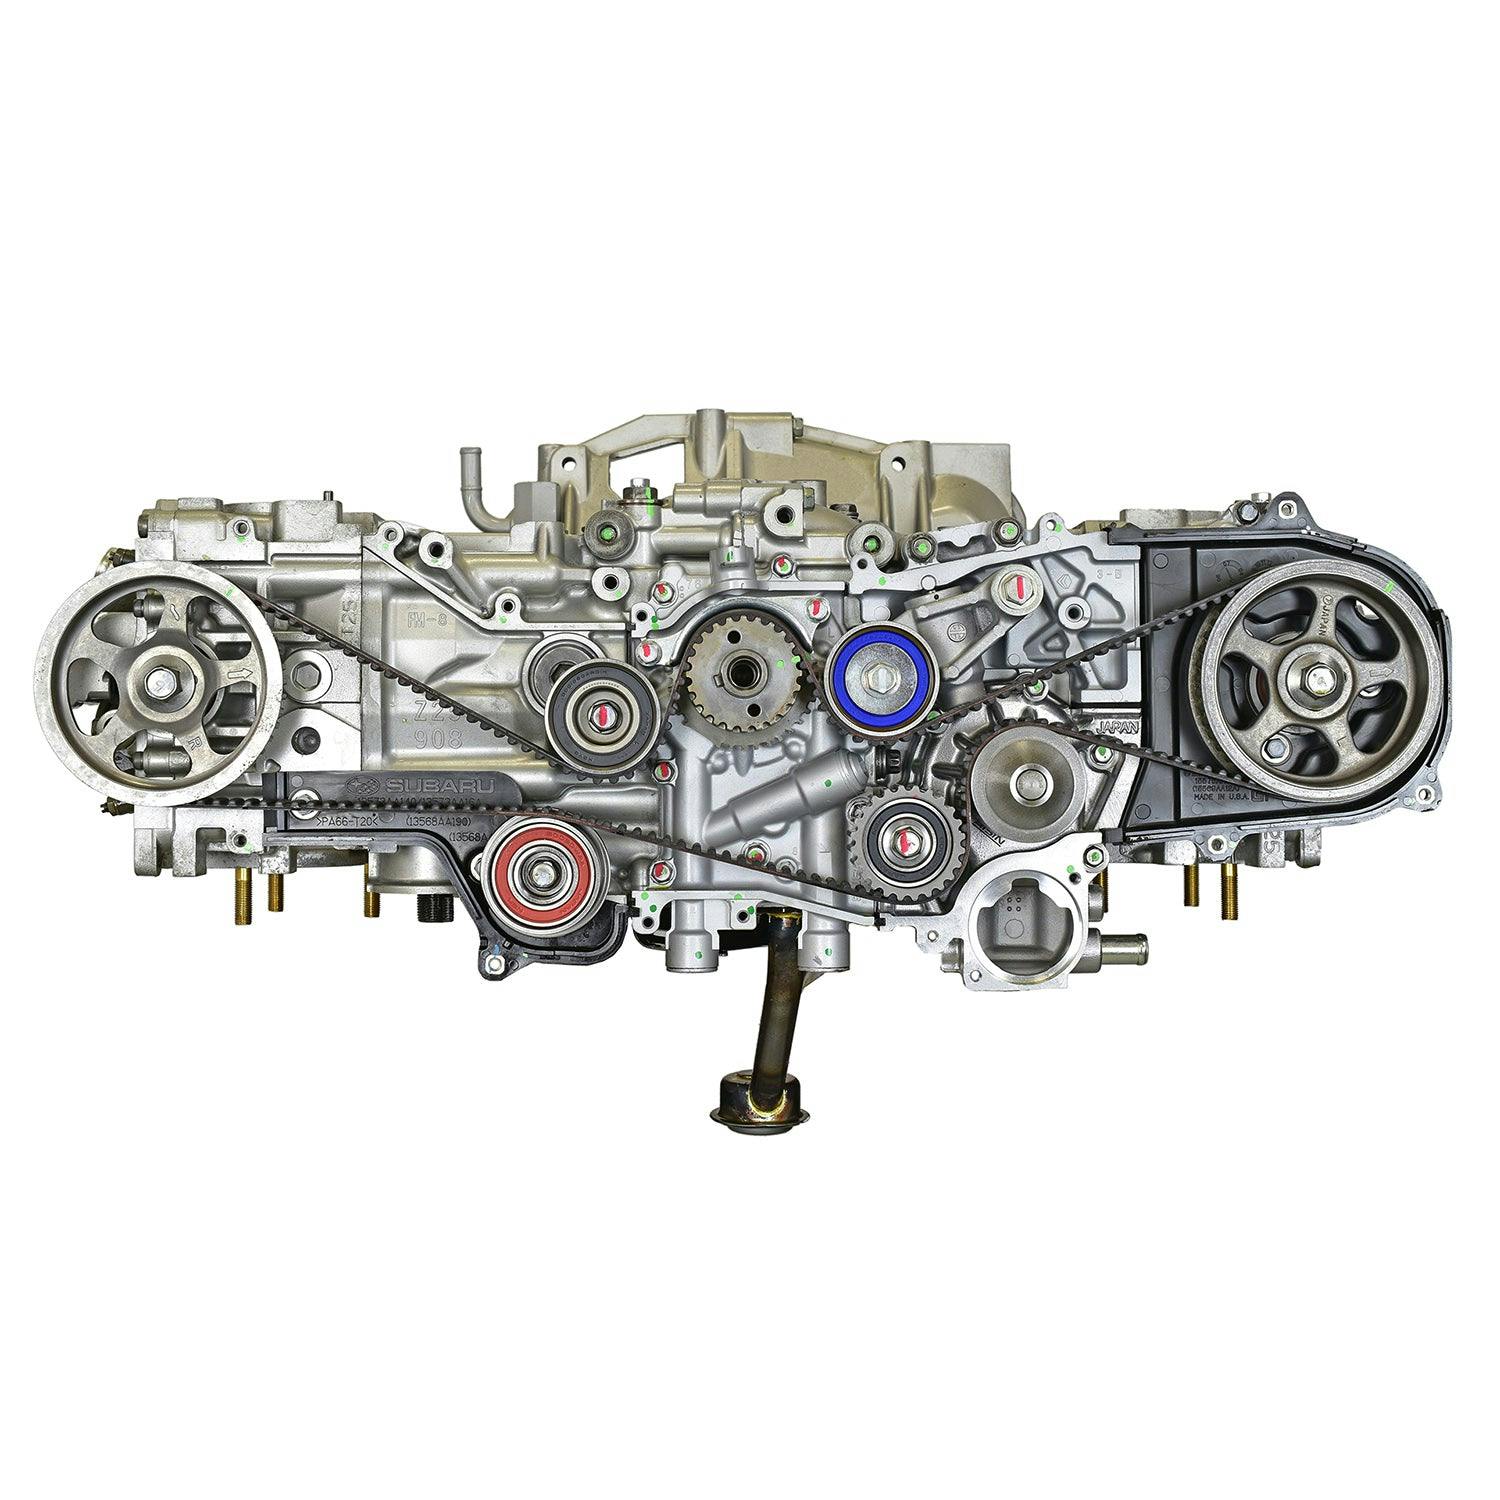 2.5L Flat-4 Engine for 2006-2009 Subaru Legacy/Outback